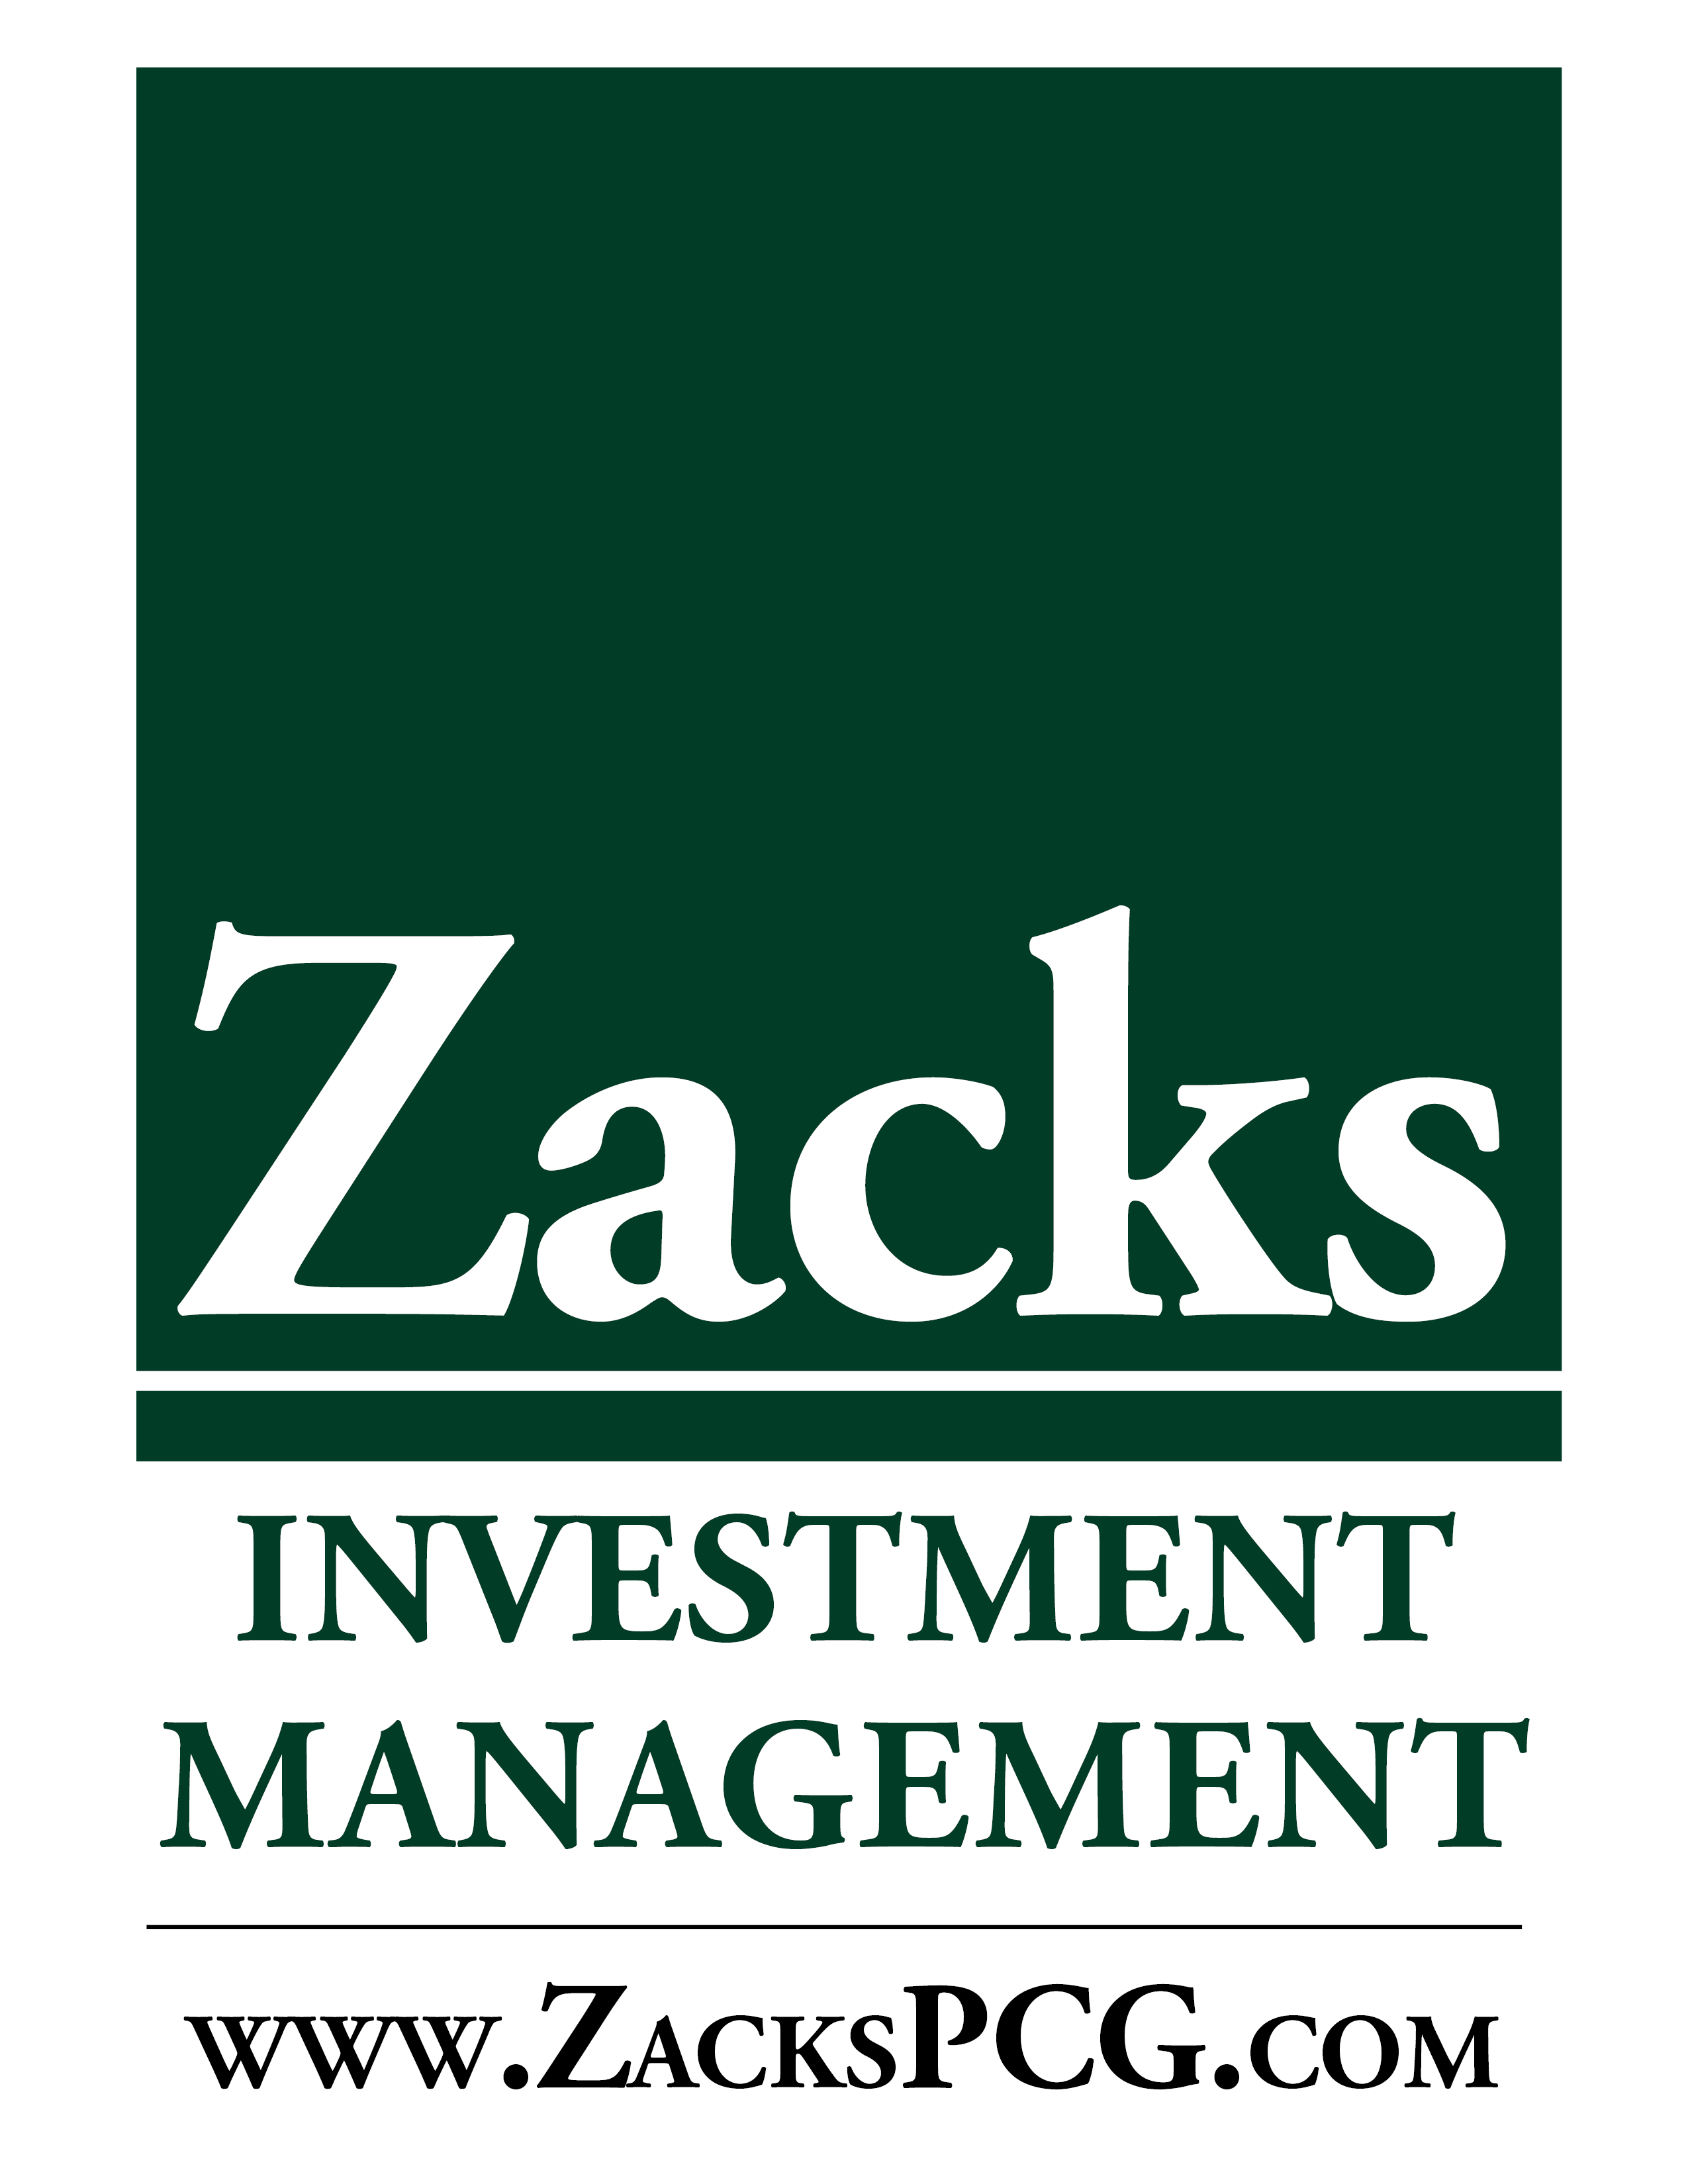 Zacks Investment Management